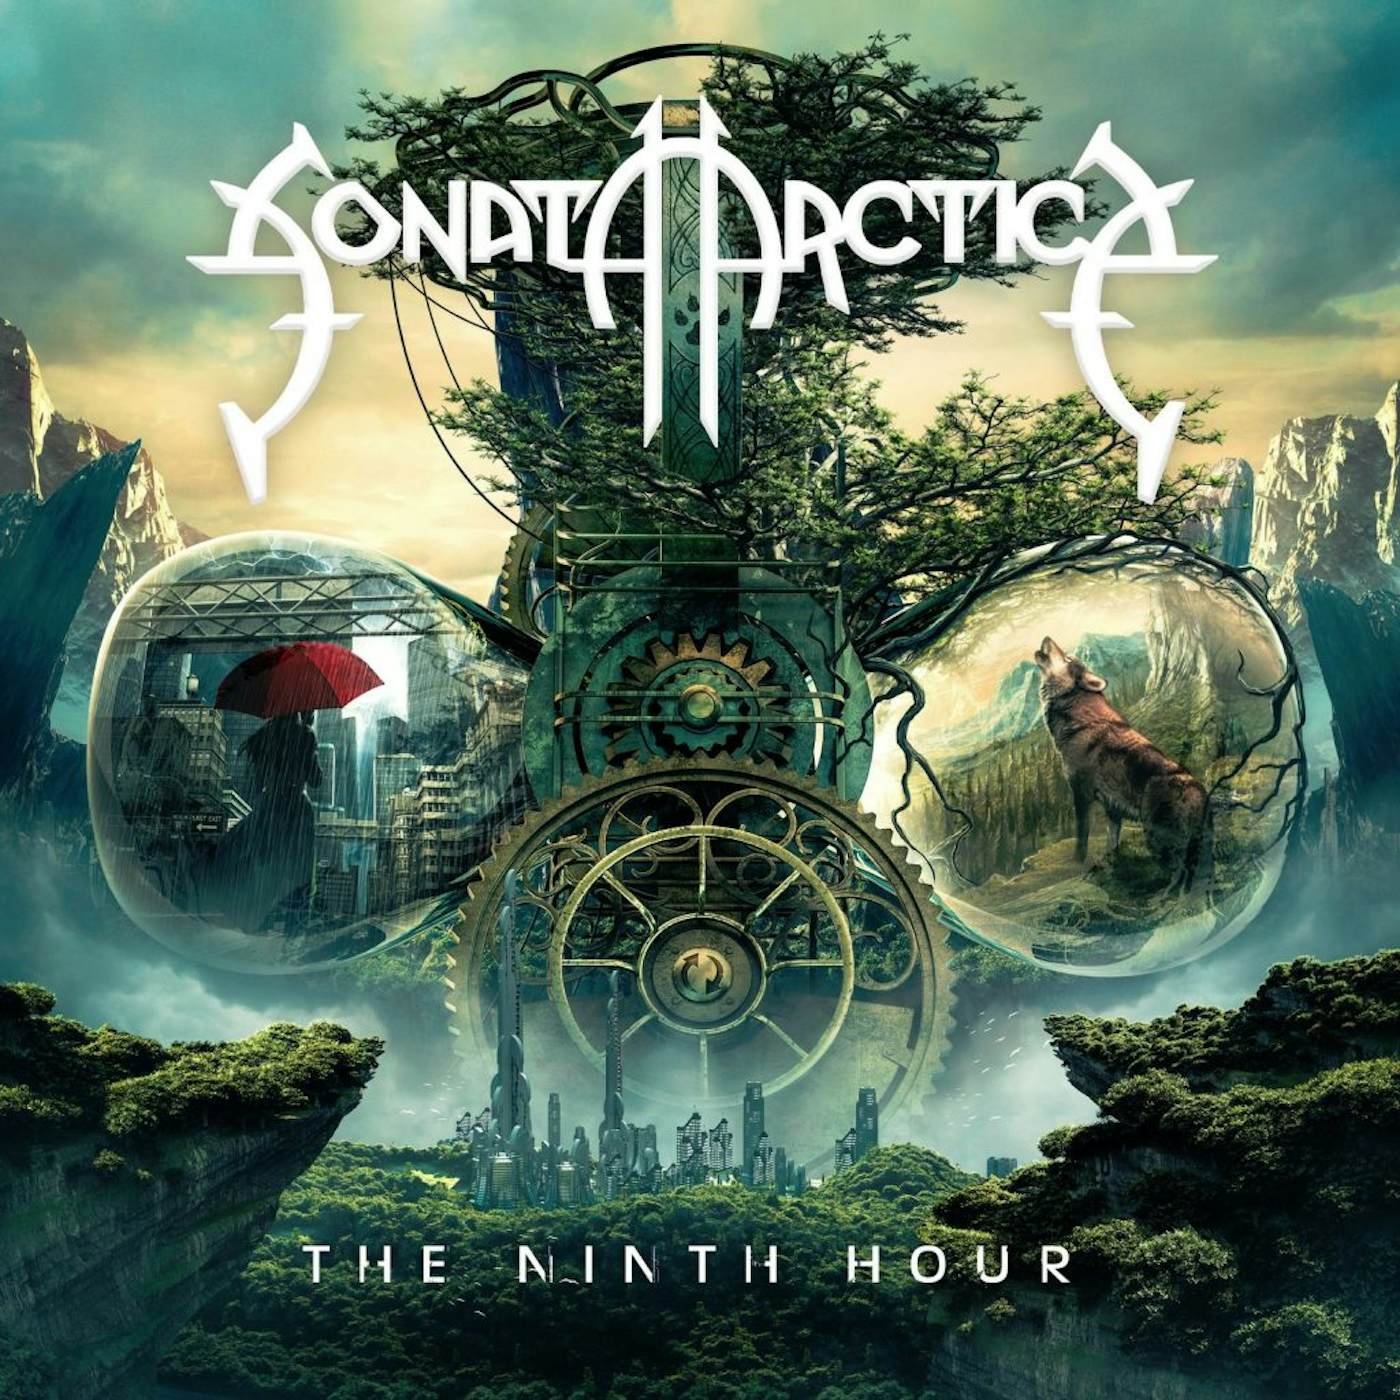 Sonata Arctica NINTH HOUR CD